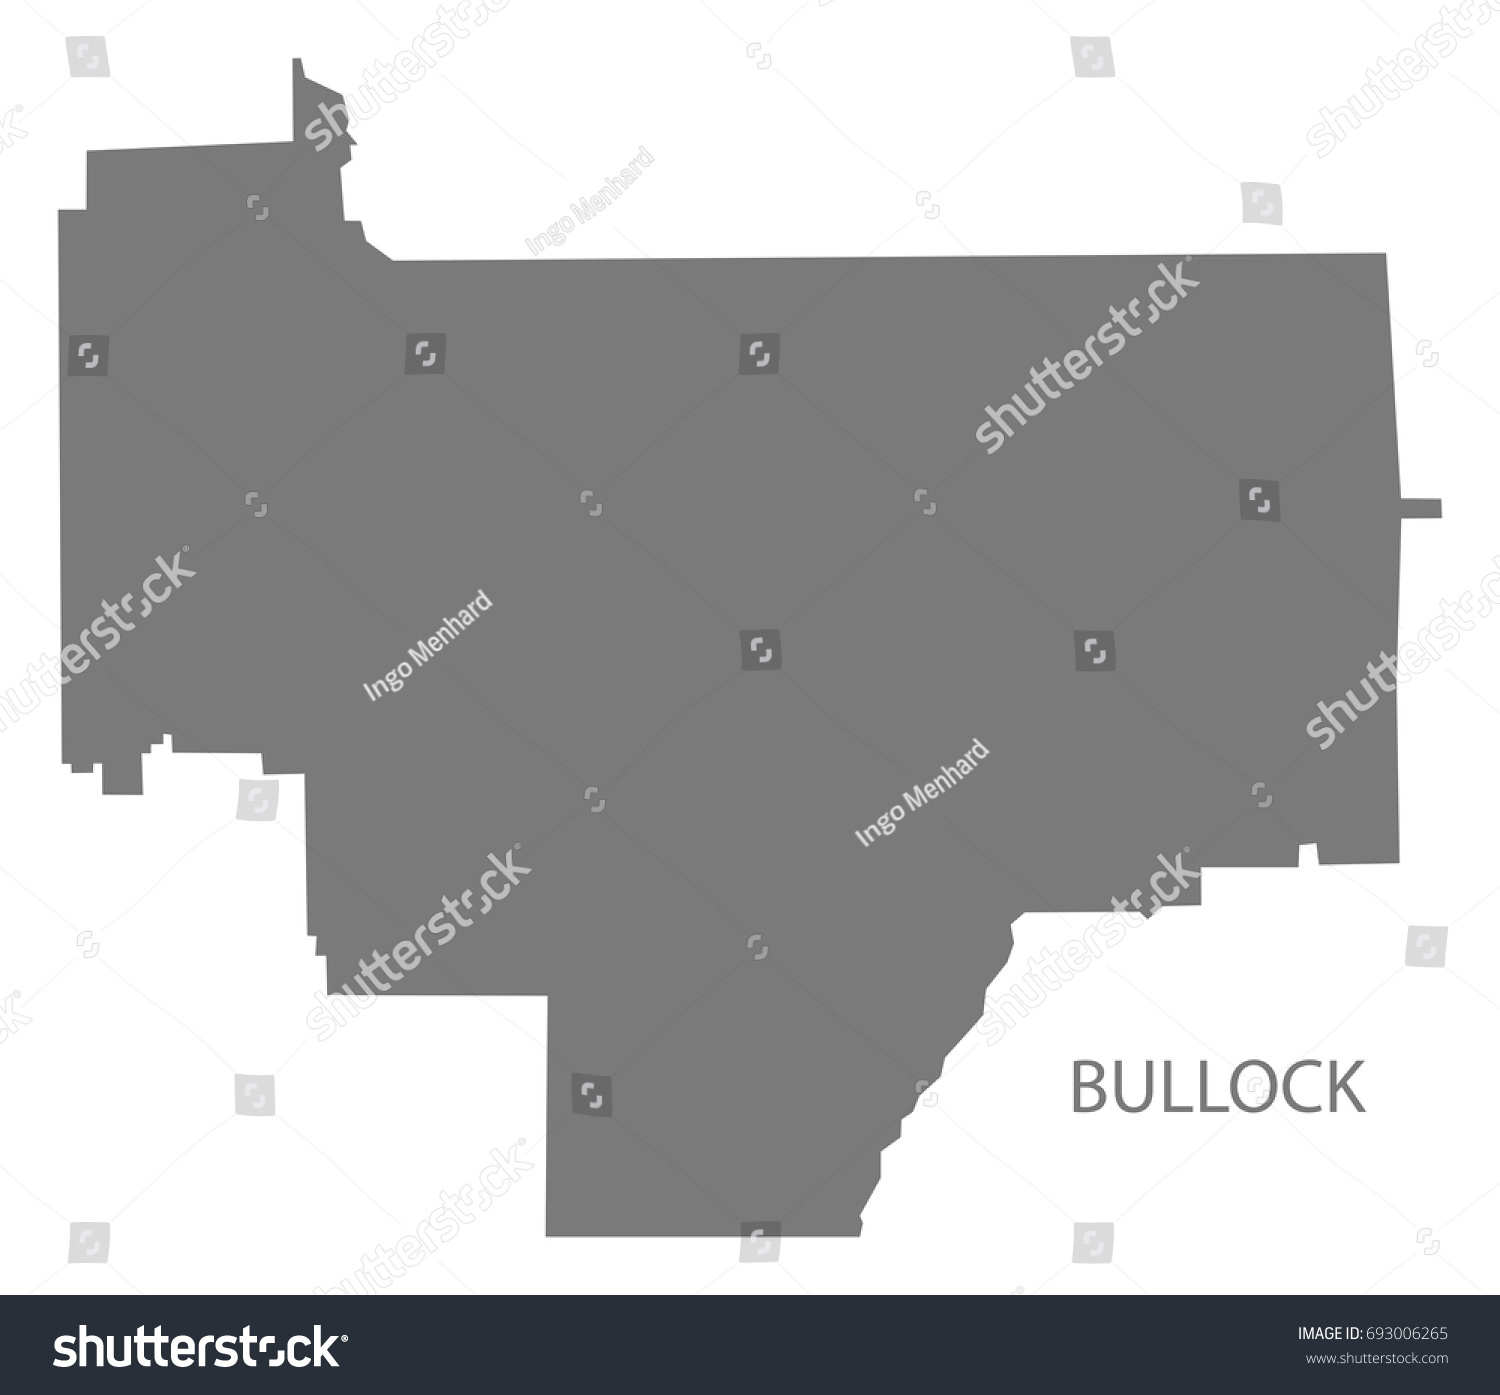 Bullock County Map Of Alabama Usa Grey Royalty Free Stock Vector 693006265 2422